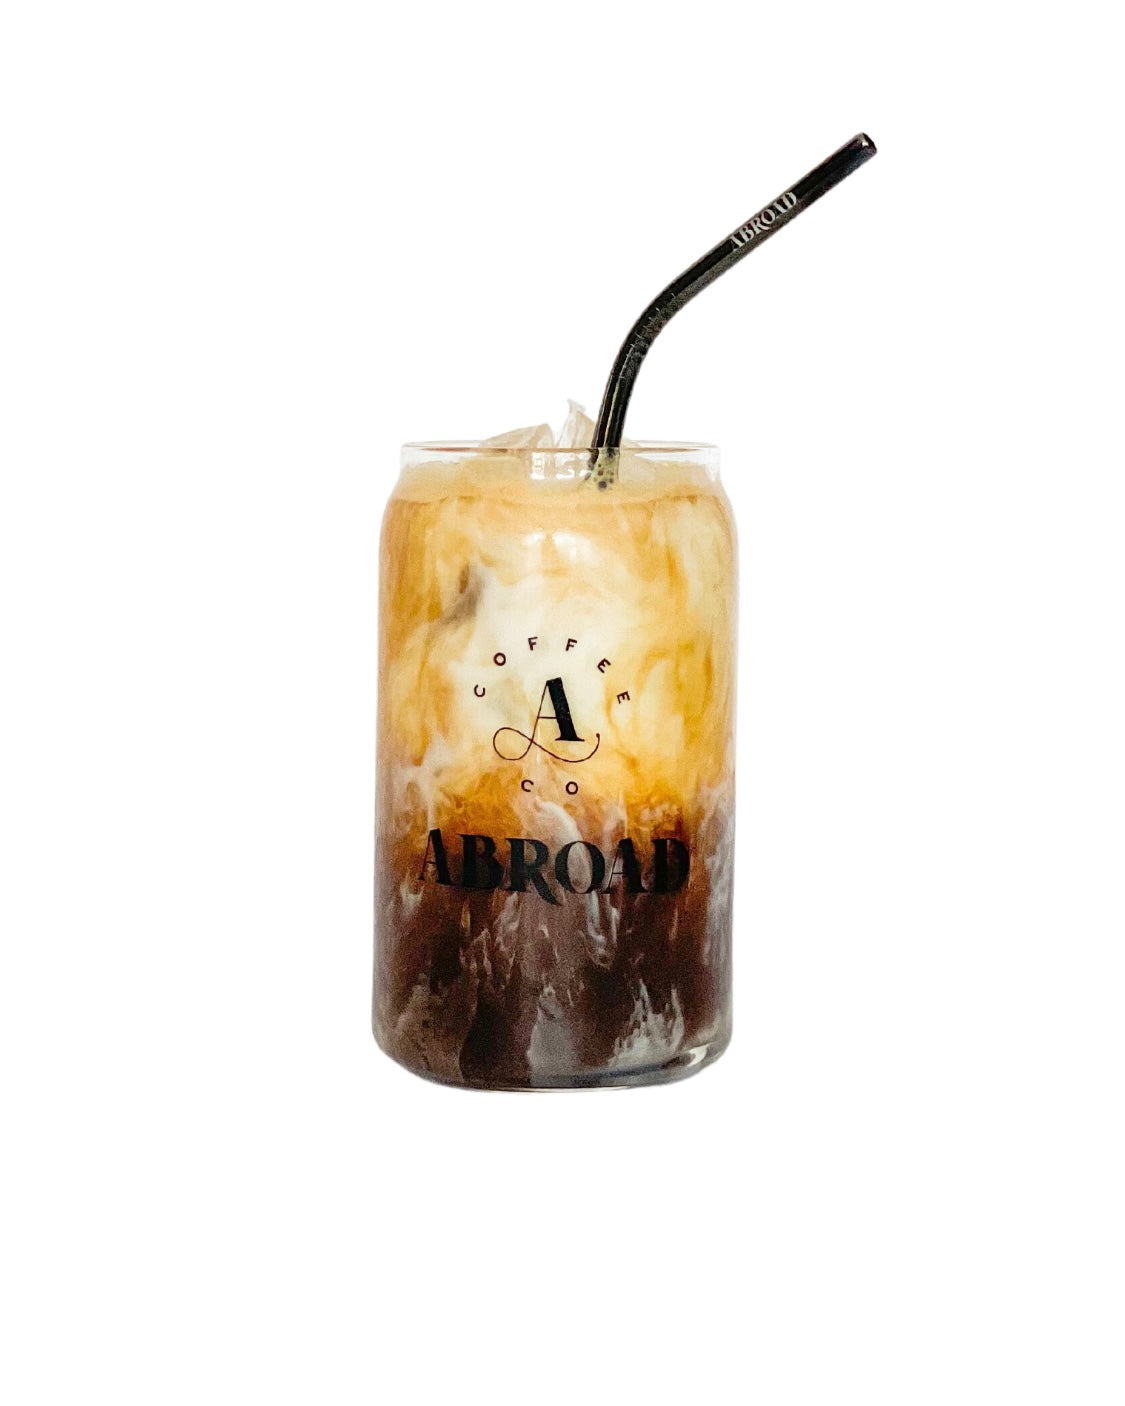 Abroad Iced Coffee Glass